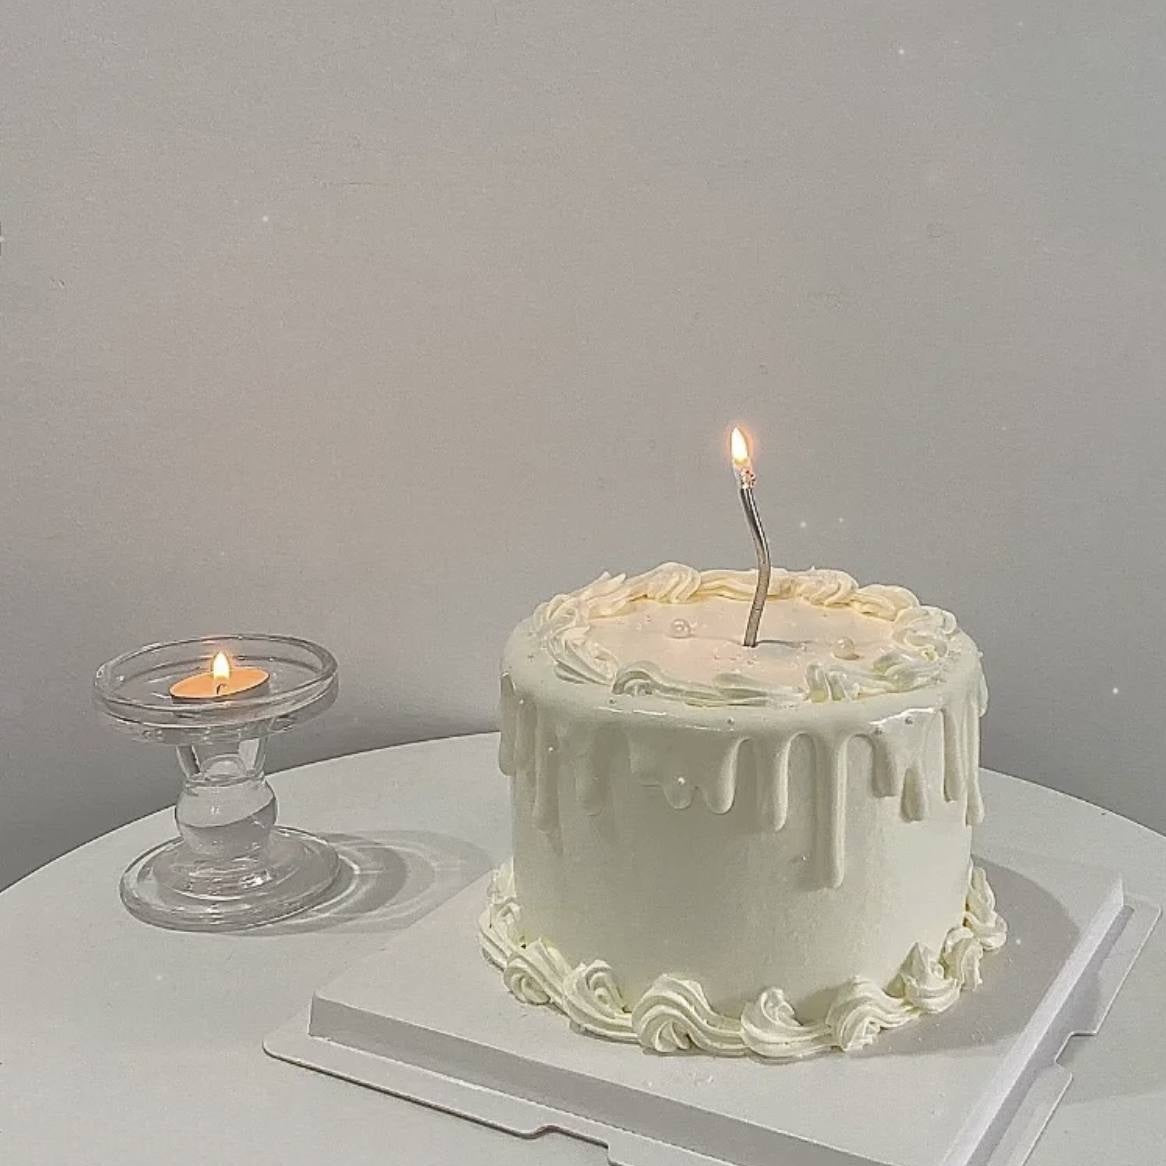 homemade birthday cake for boyfriend